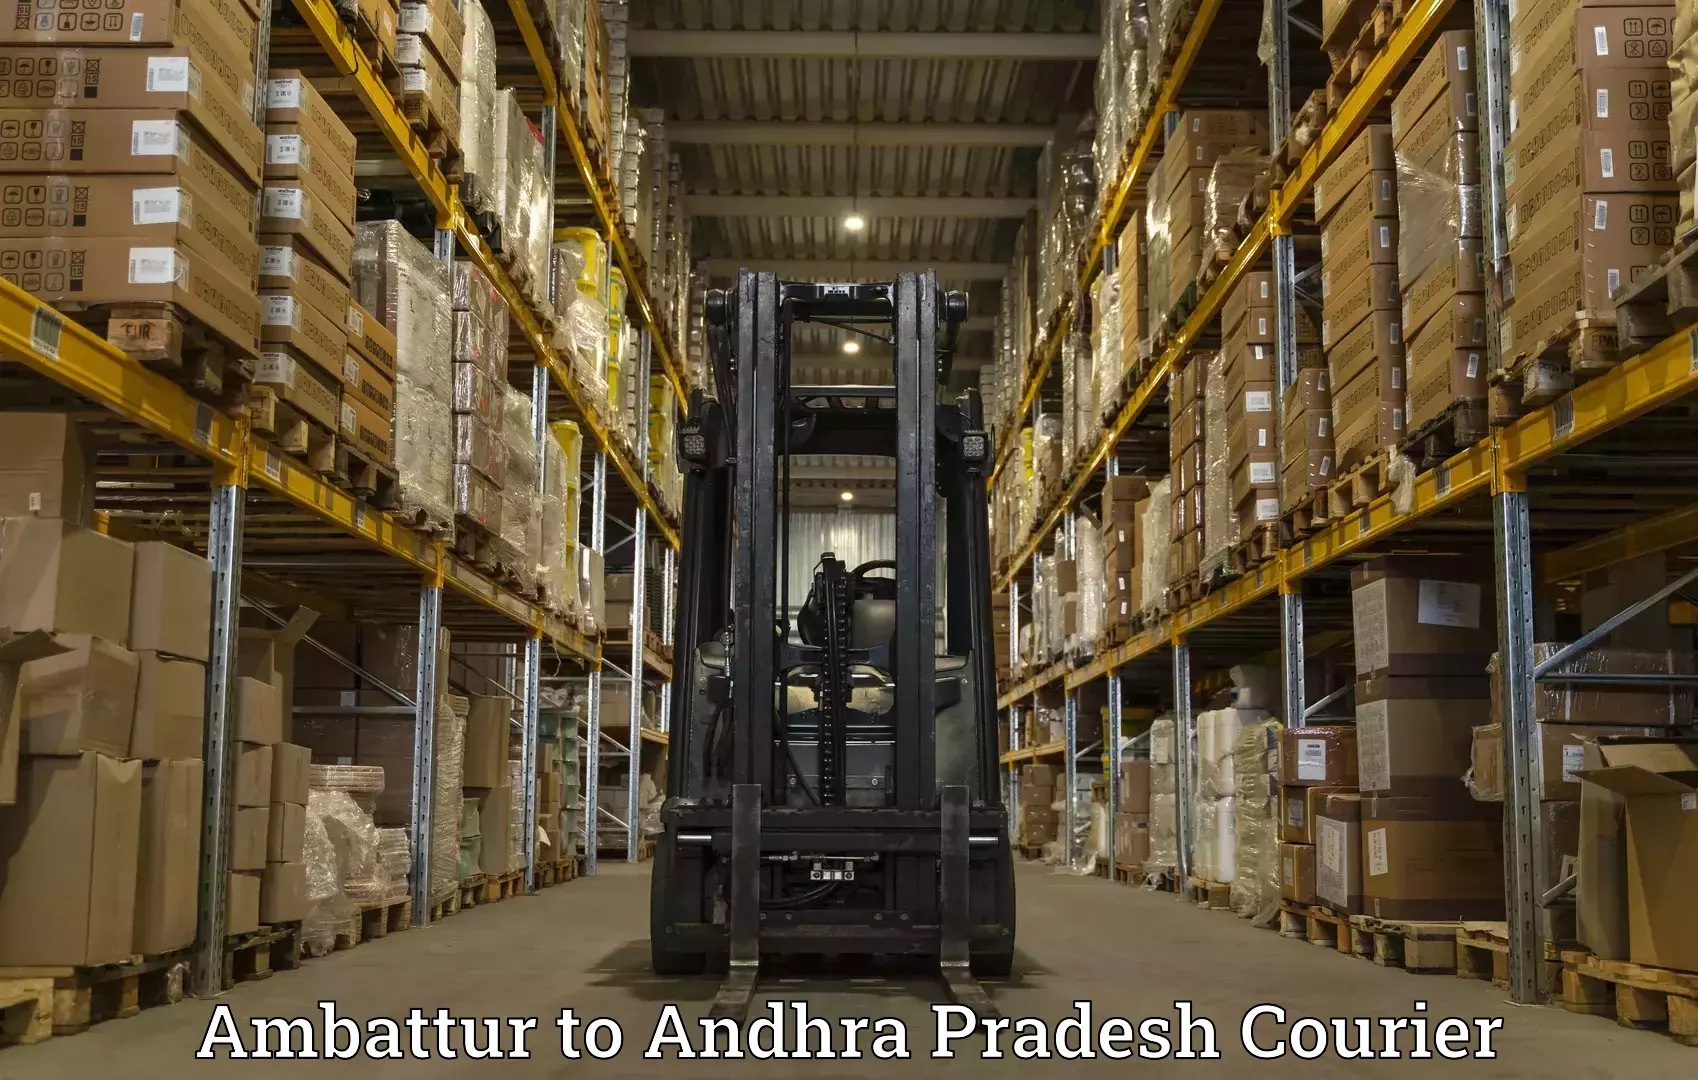 Customized shipping options Ambattur to Chodavaram